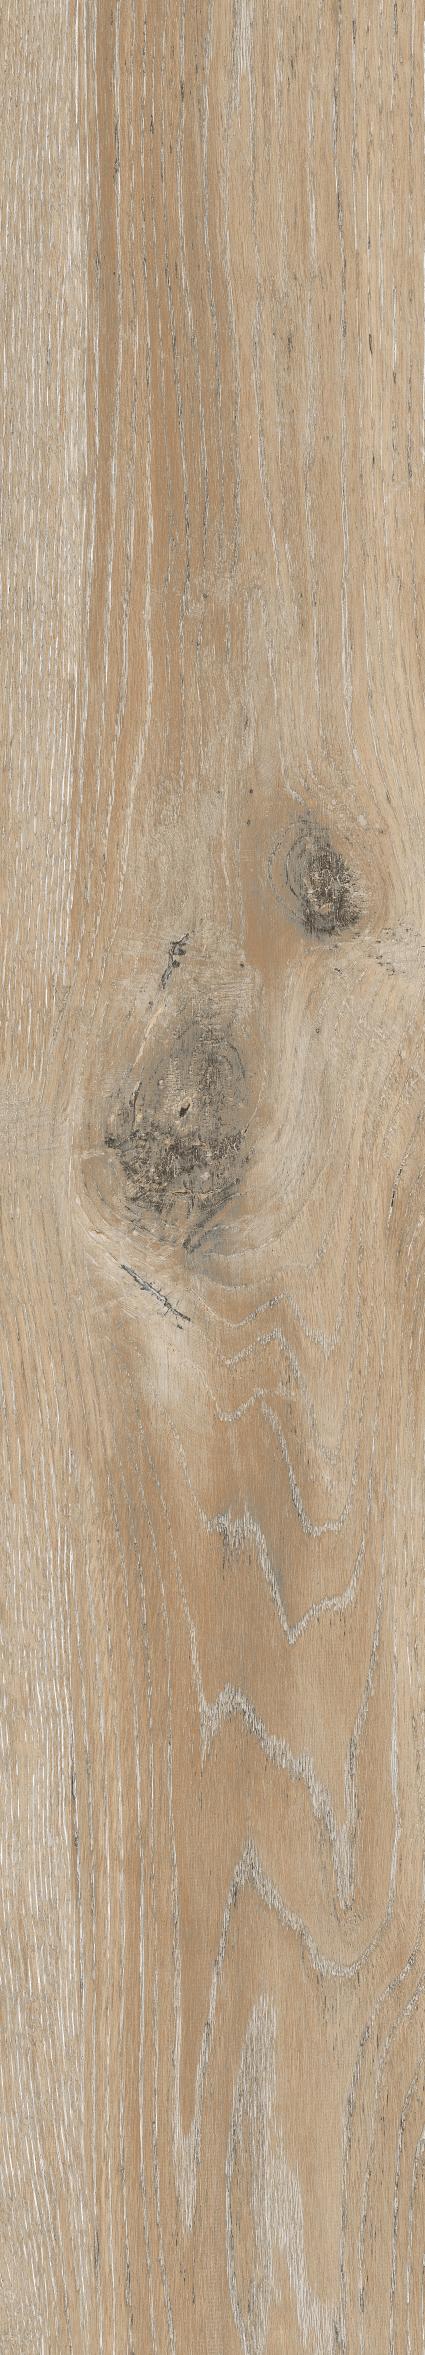 Коллекция плитки Absolut Gres Almond Wood